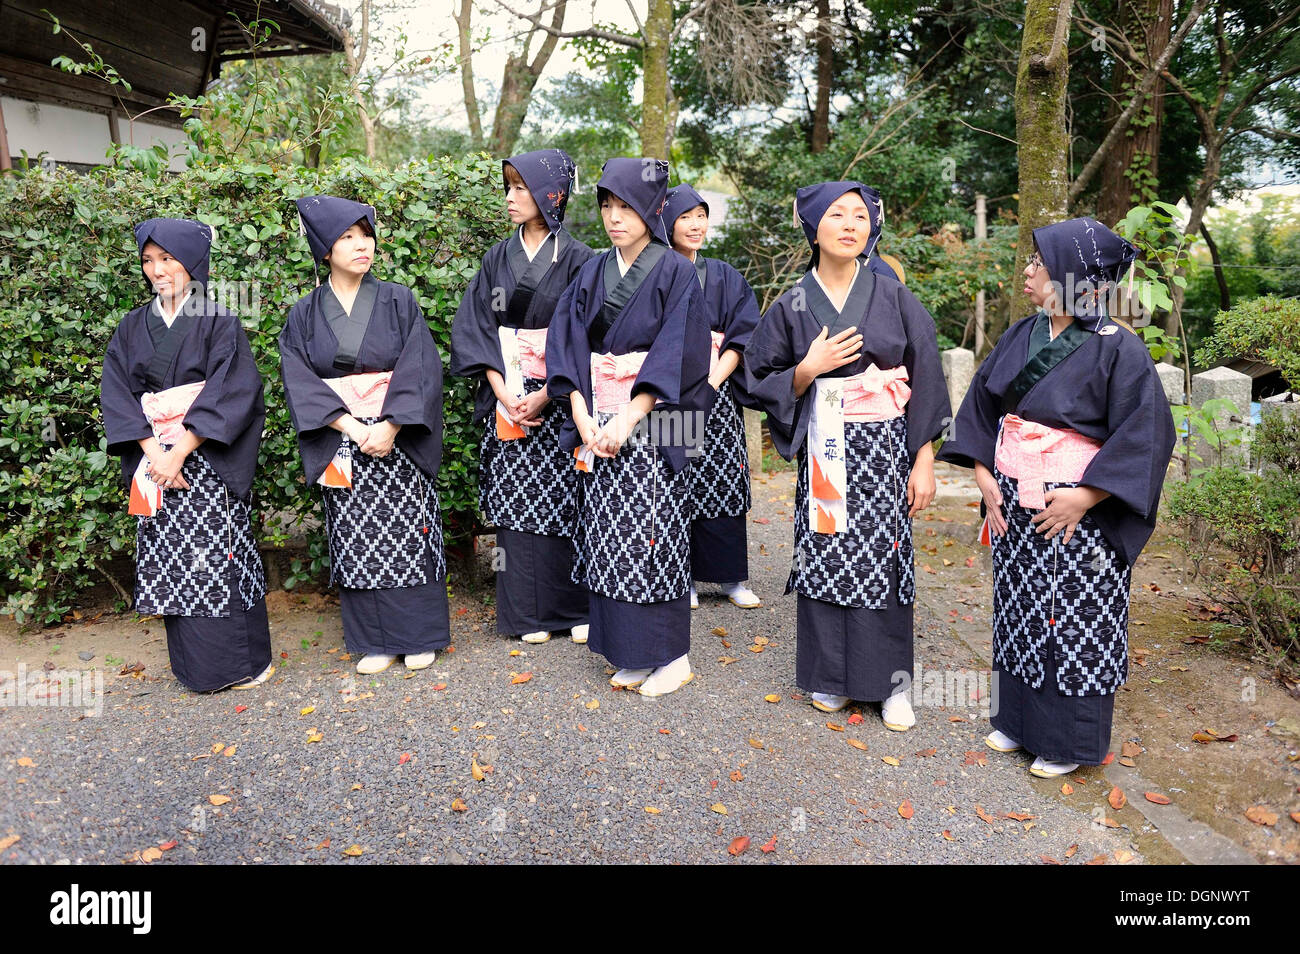 Japanese women wearing traditional peasant clothing, Iwakura Matsuri Festival in Kyoto, Japan, East Asia, Asia Stock Photo